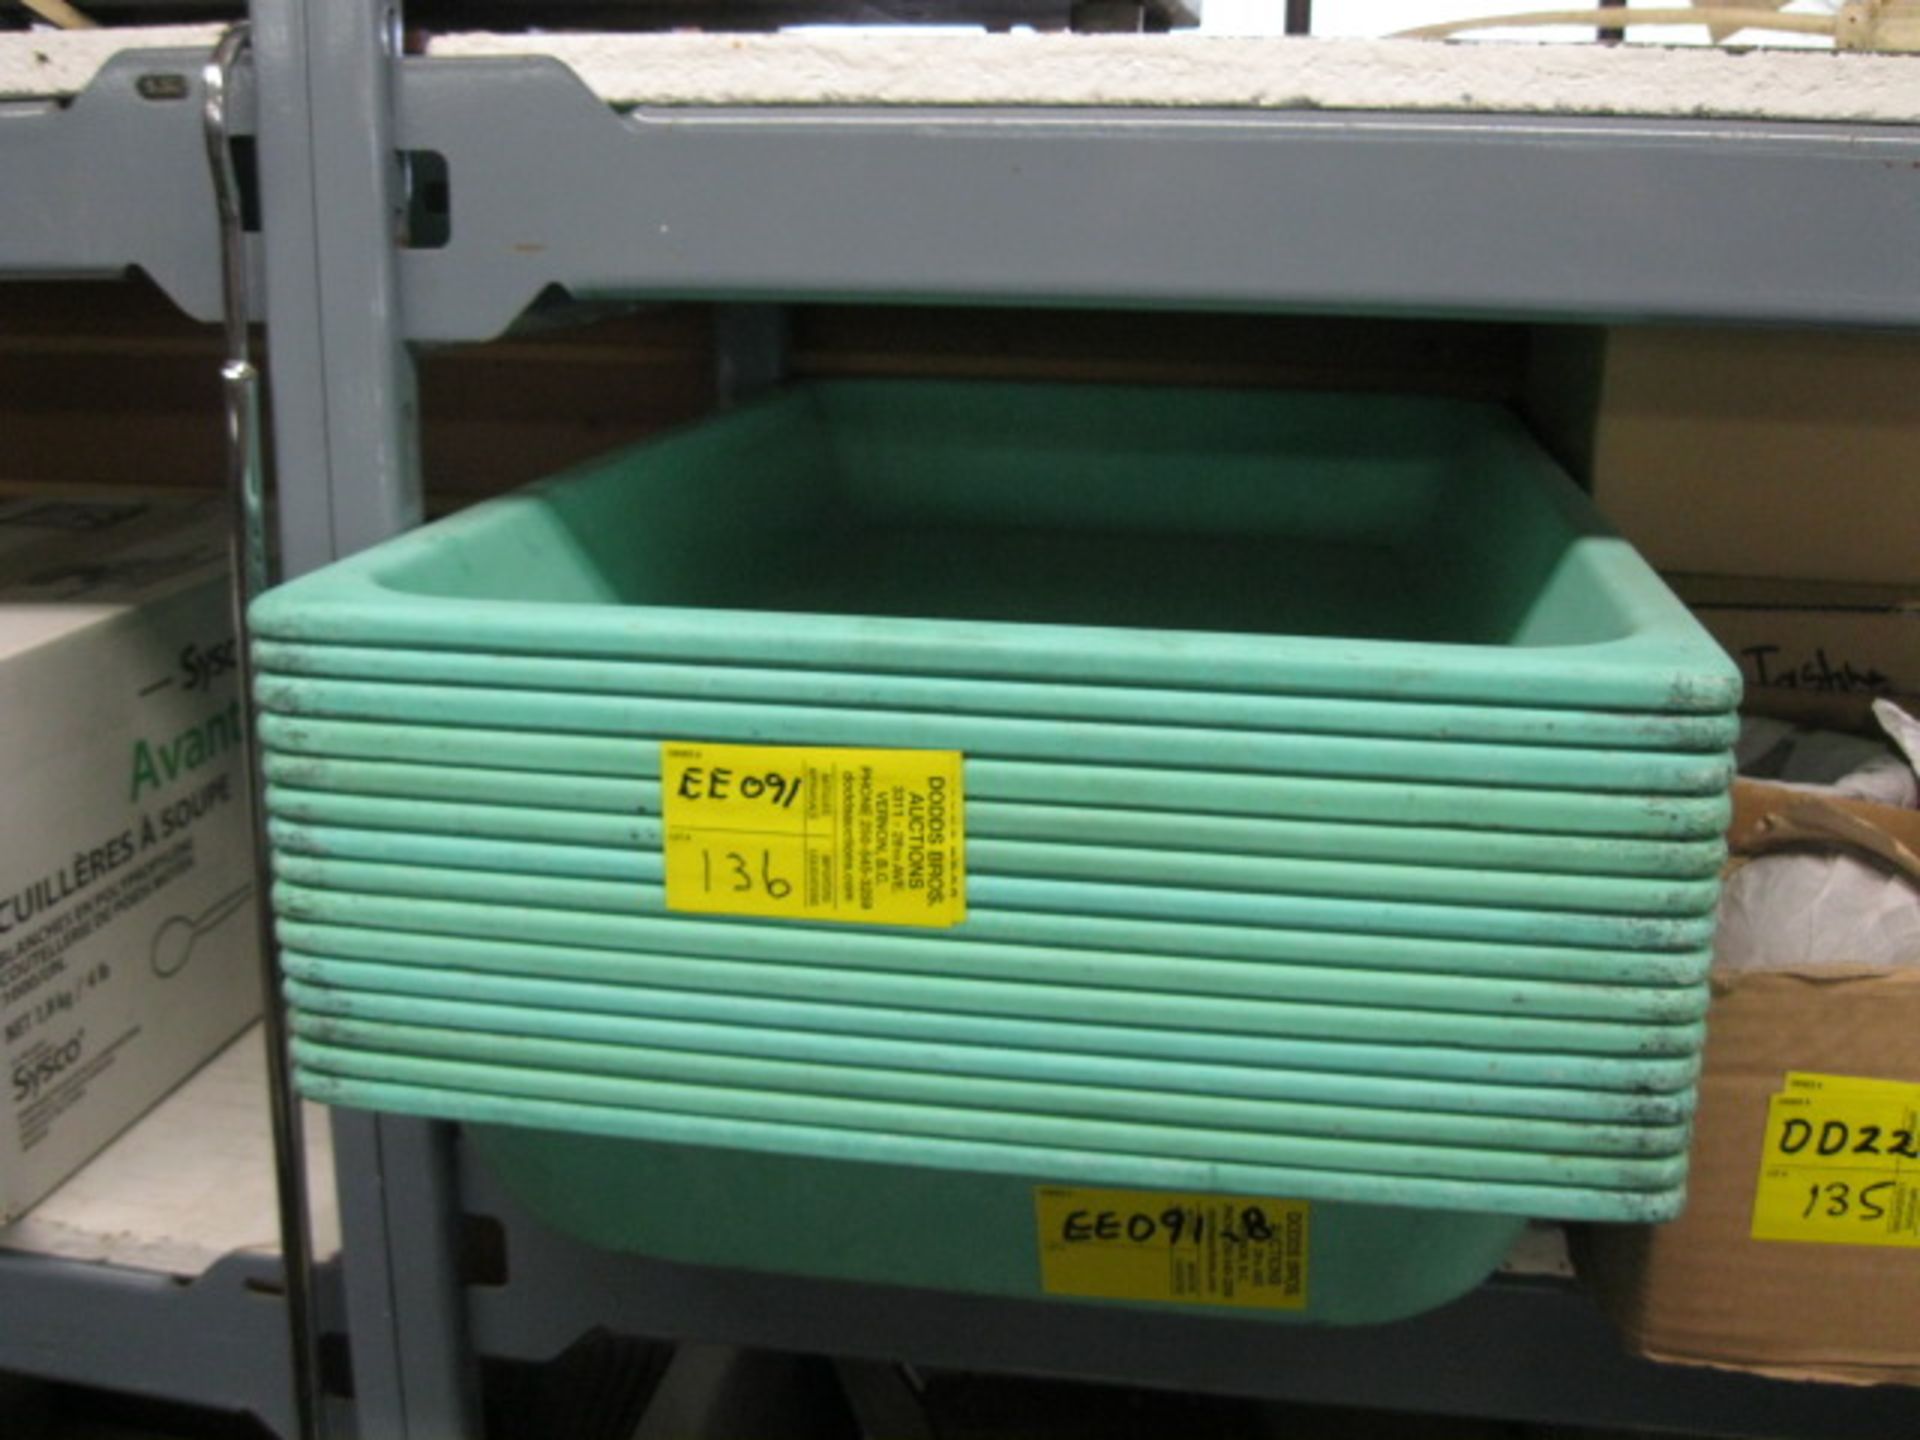 Green plastic trays